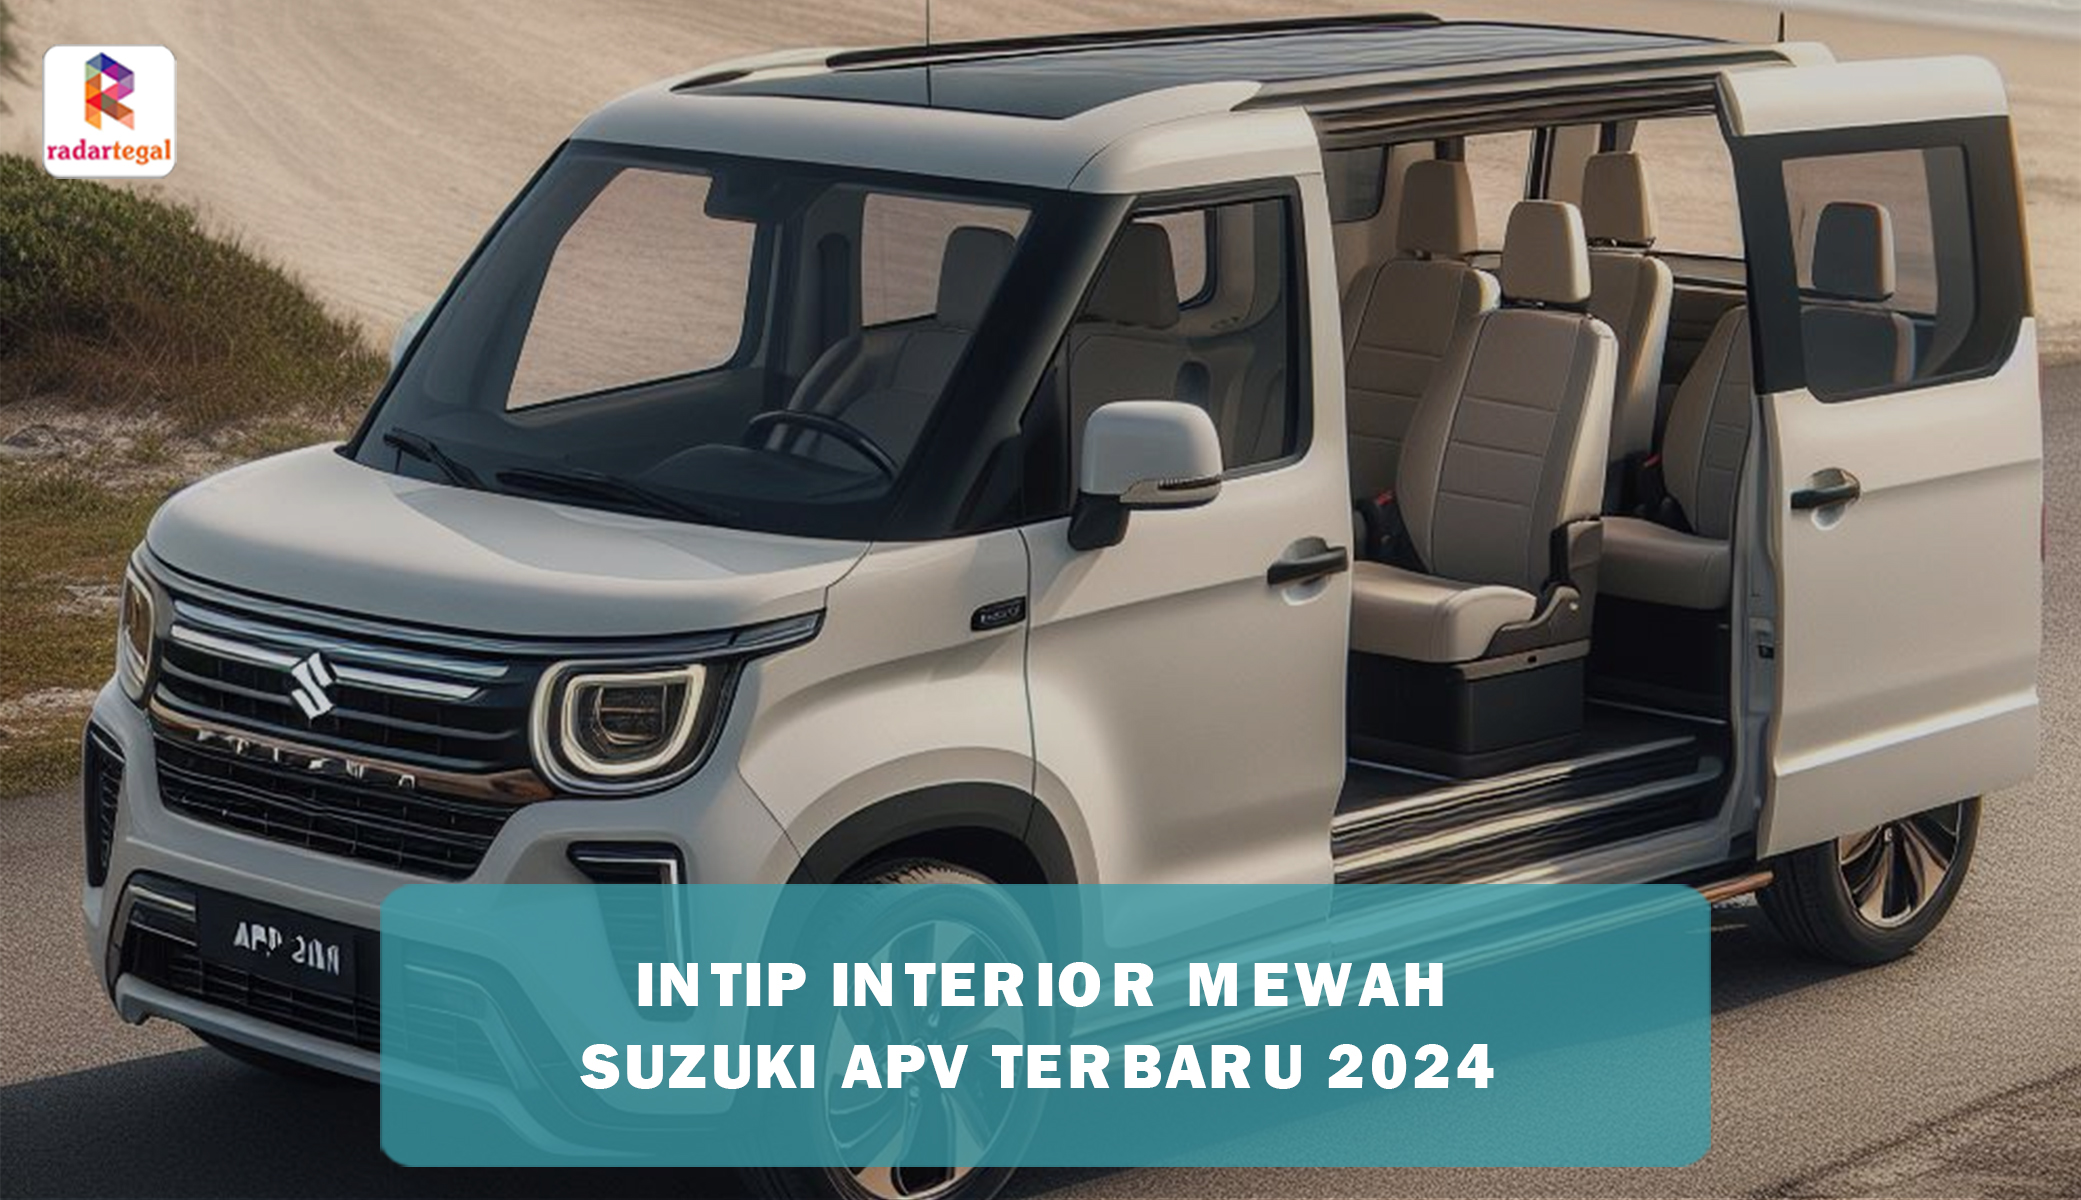 Intip Interior Mewah Suzuki APV Terbaru 2024, Bikin Penumpang Betah dan Bungah